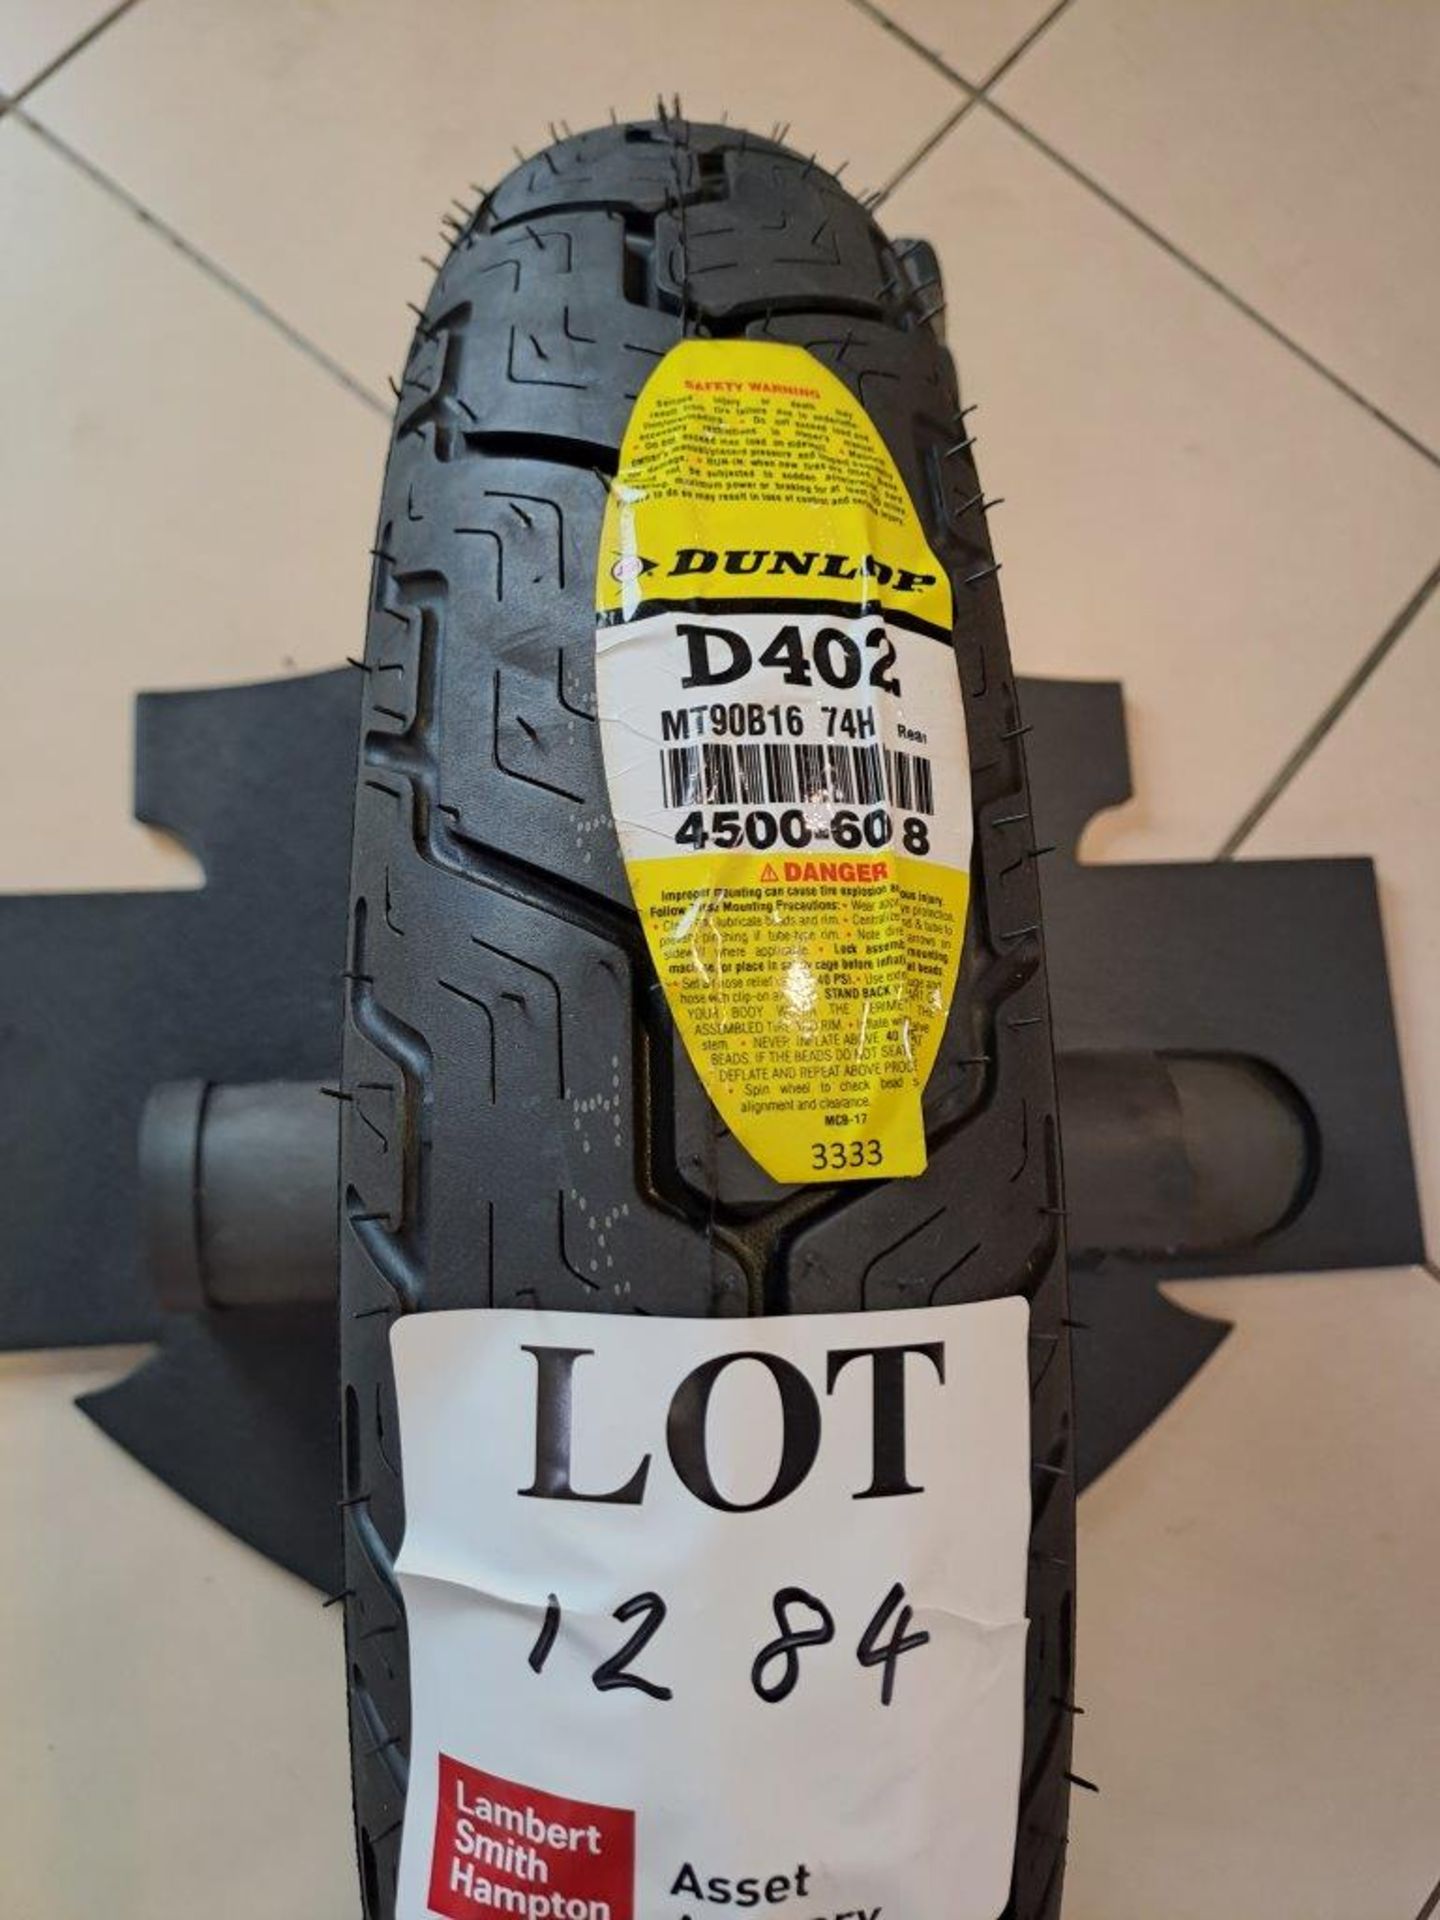 Dunlop D402 MT90B16-74H Tyre - Image 2 of 4